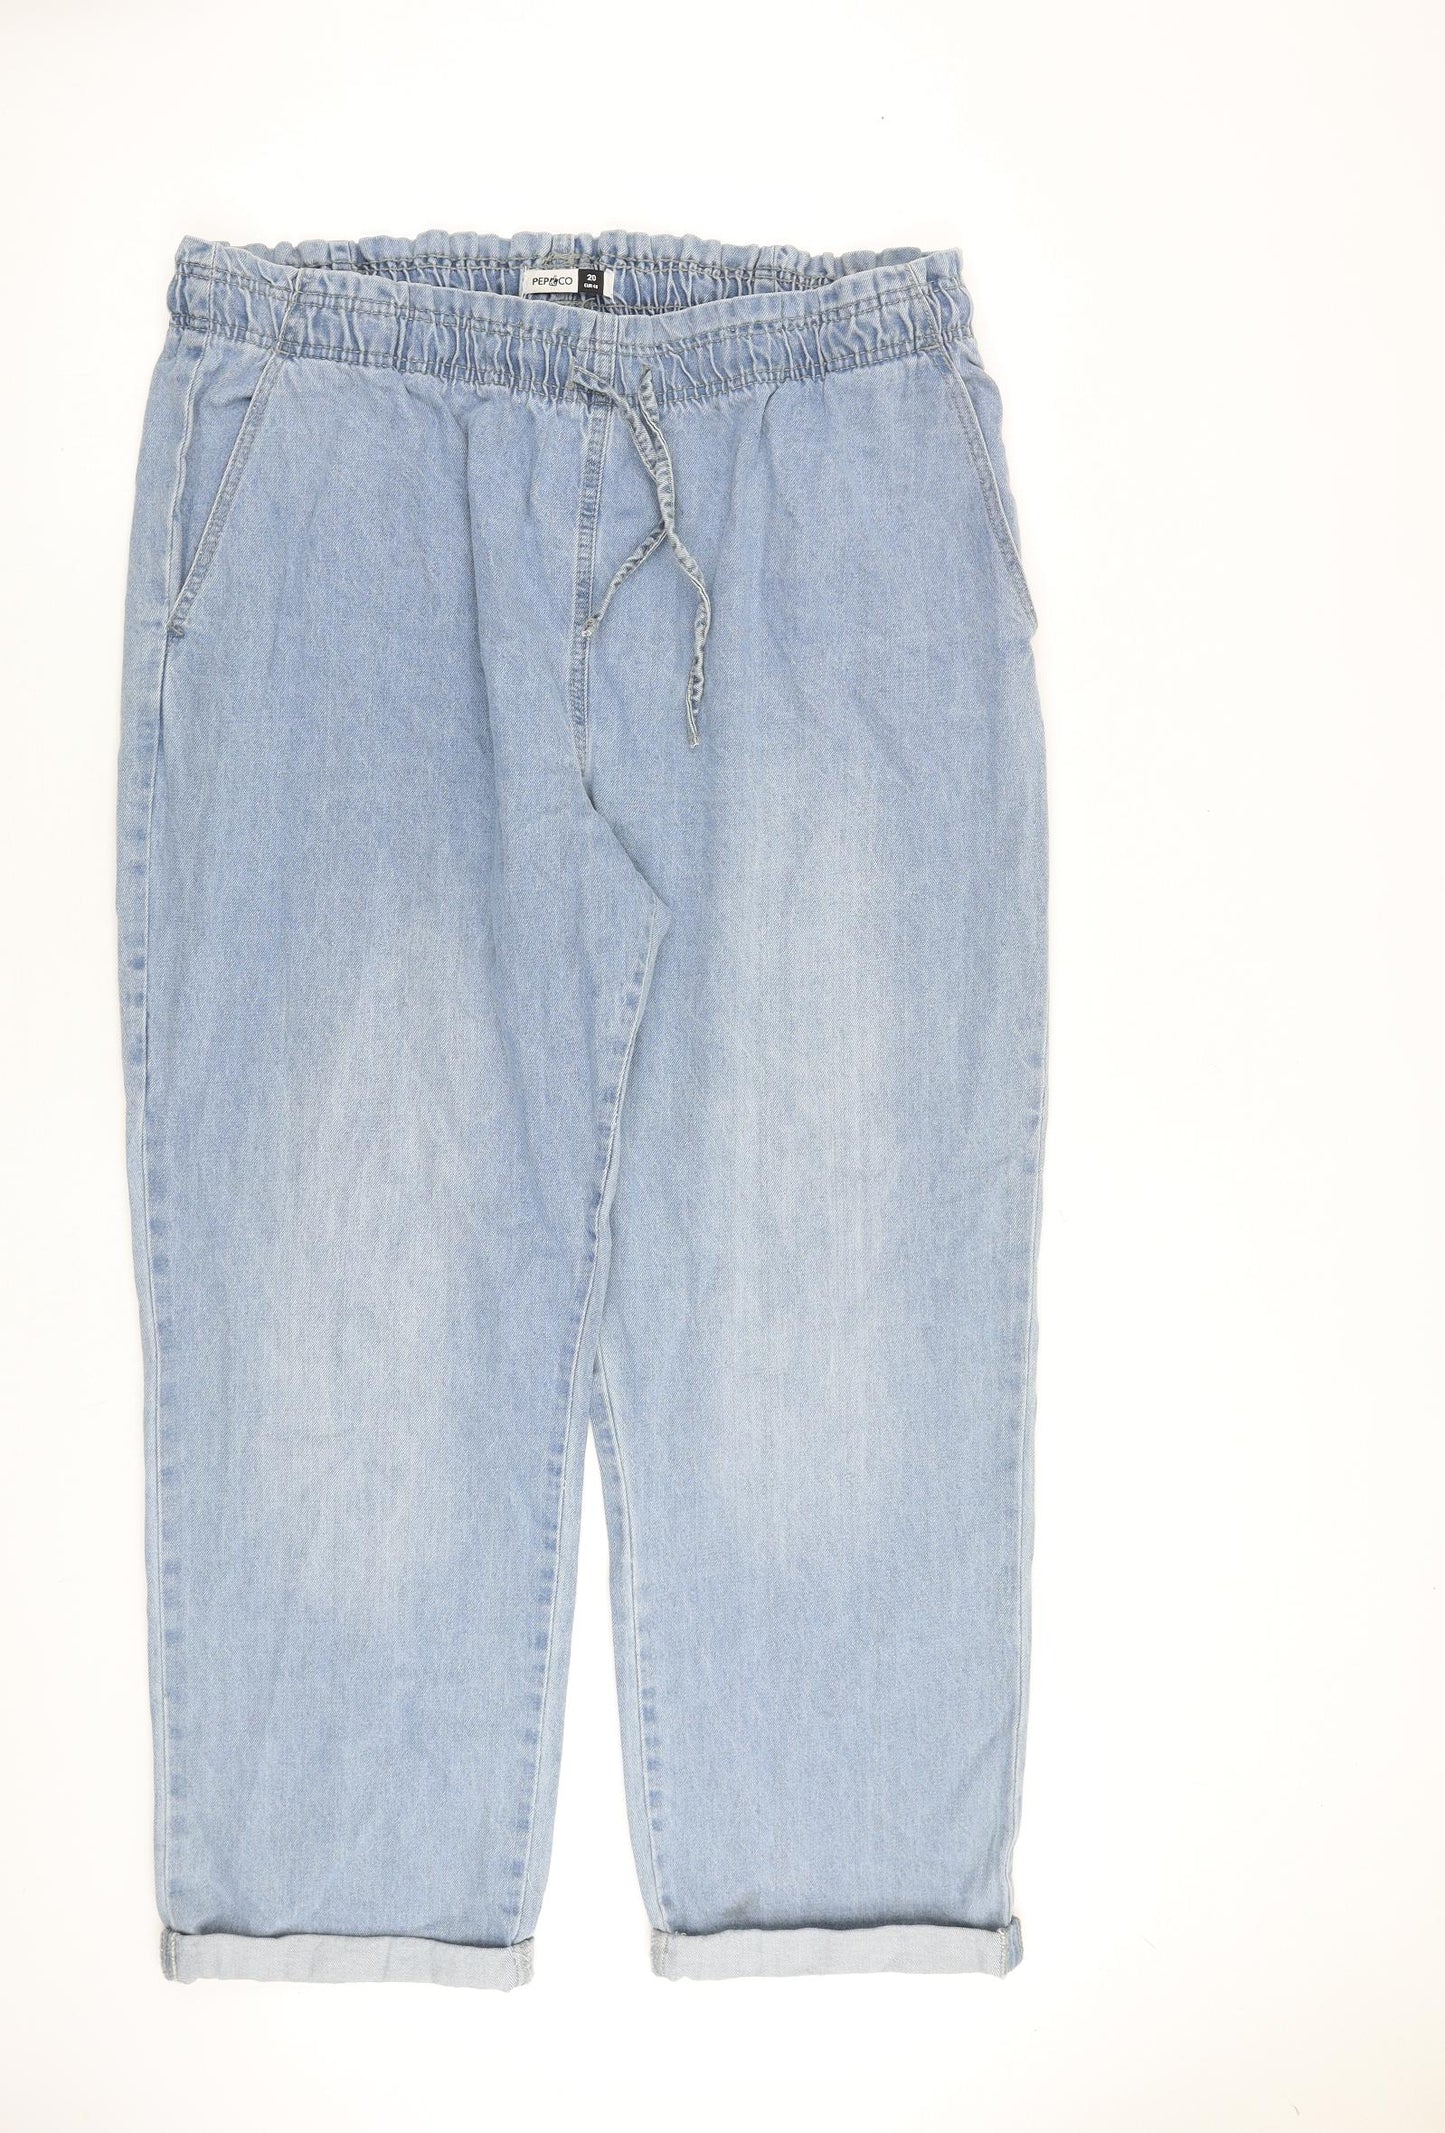 Pep&Co Womens Blue Cotton Wide-Leg Jeans Size 20 L29 in Regular Tie